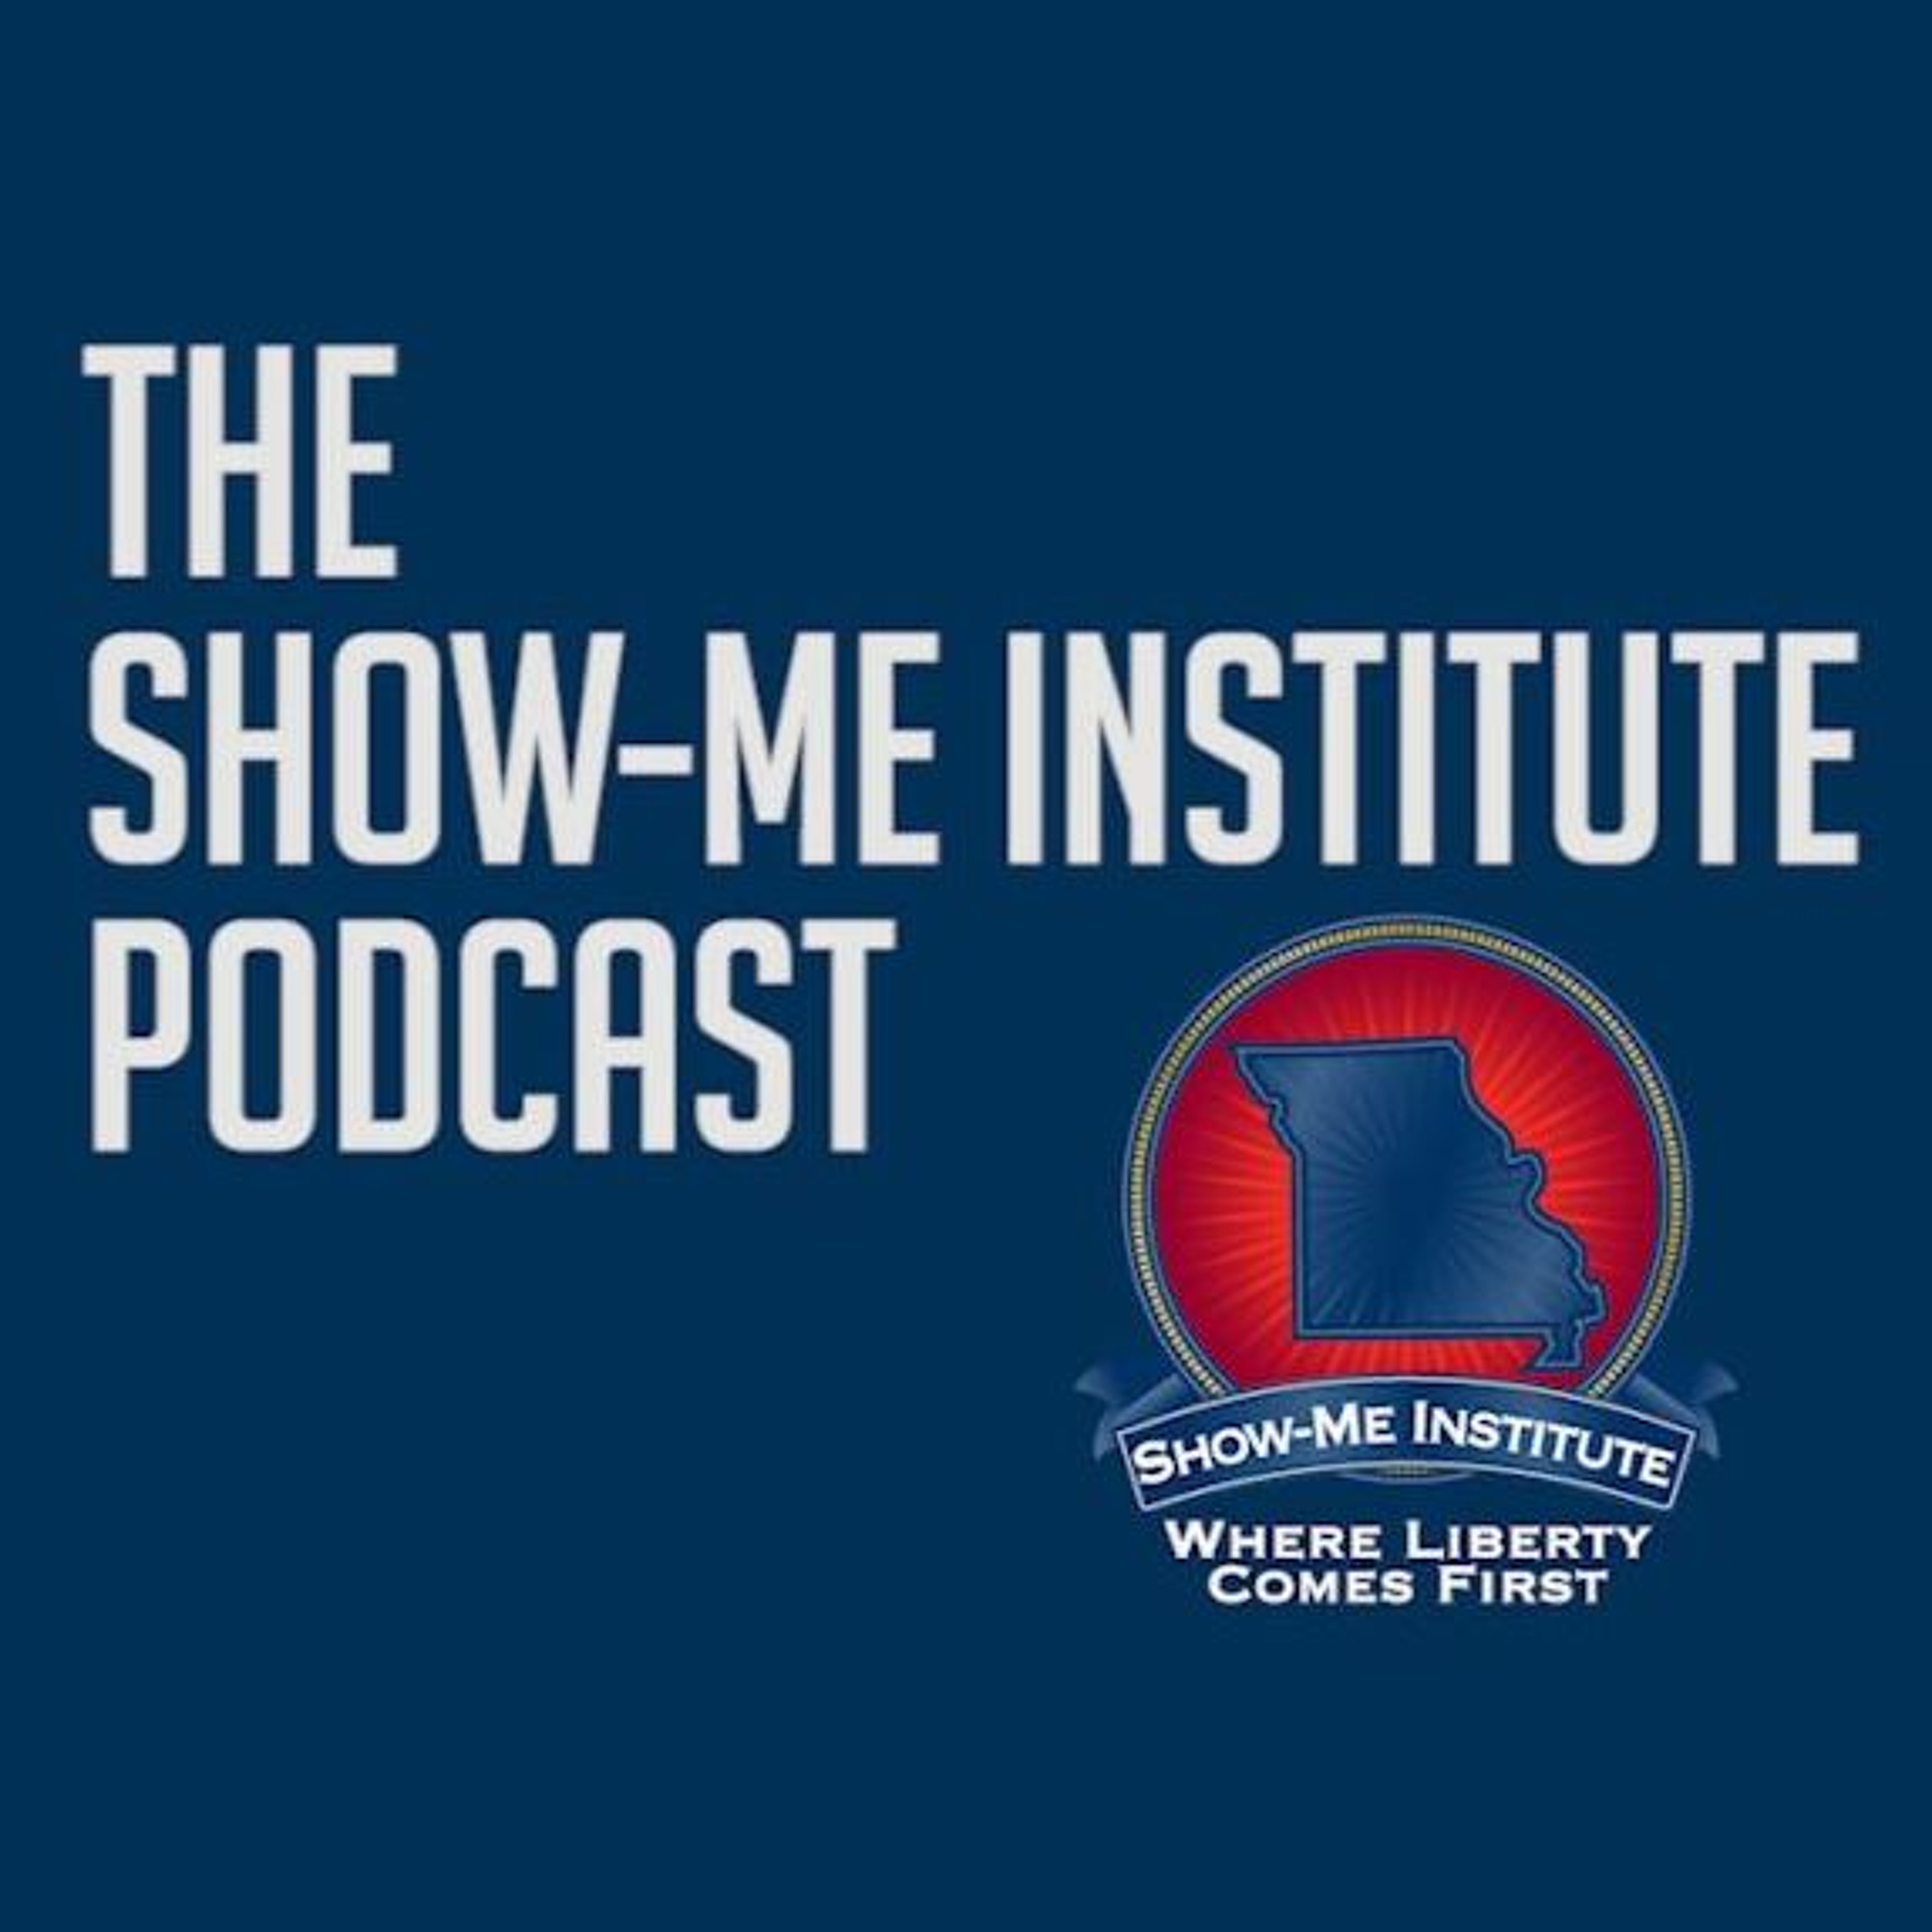 SMI Podcast: Could Medicaid Expansion Save Missouri Money? - Elias Tsapelas & Patrick Ishmael